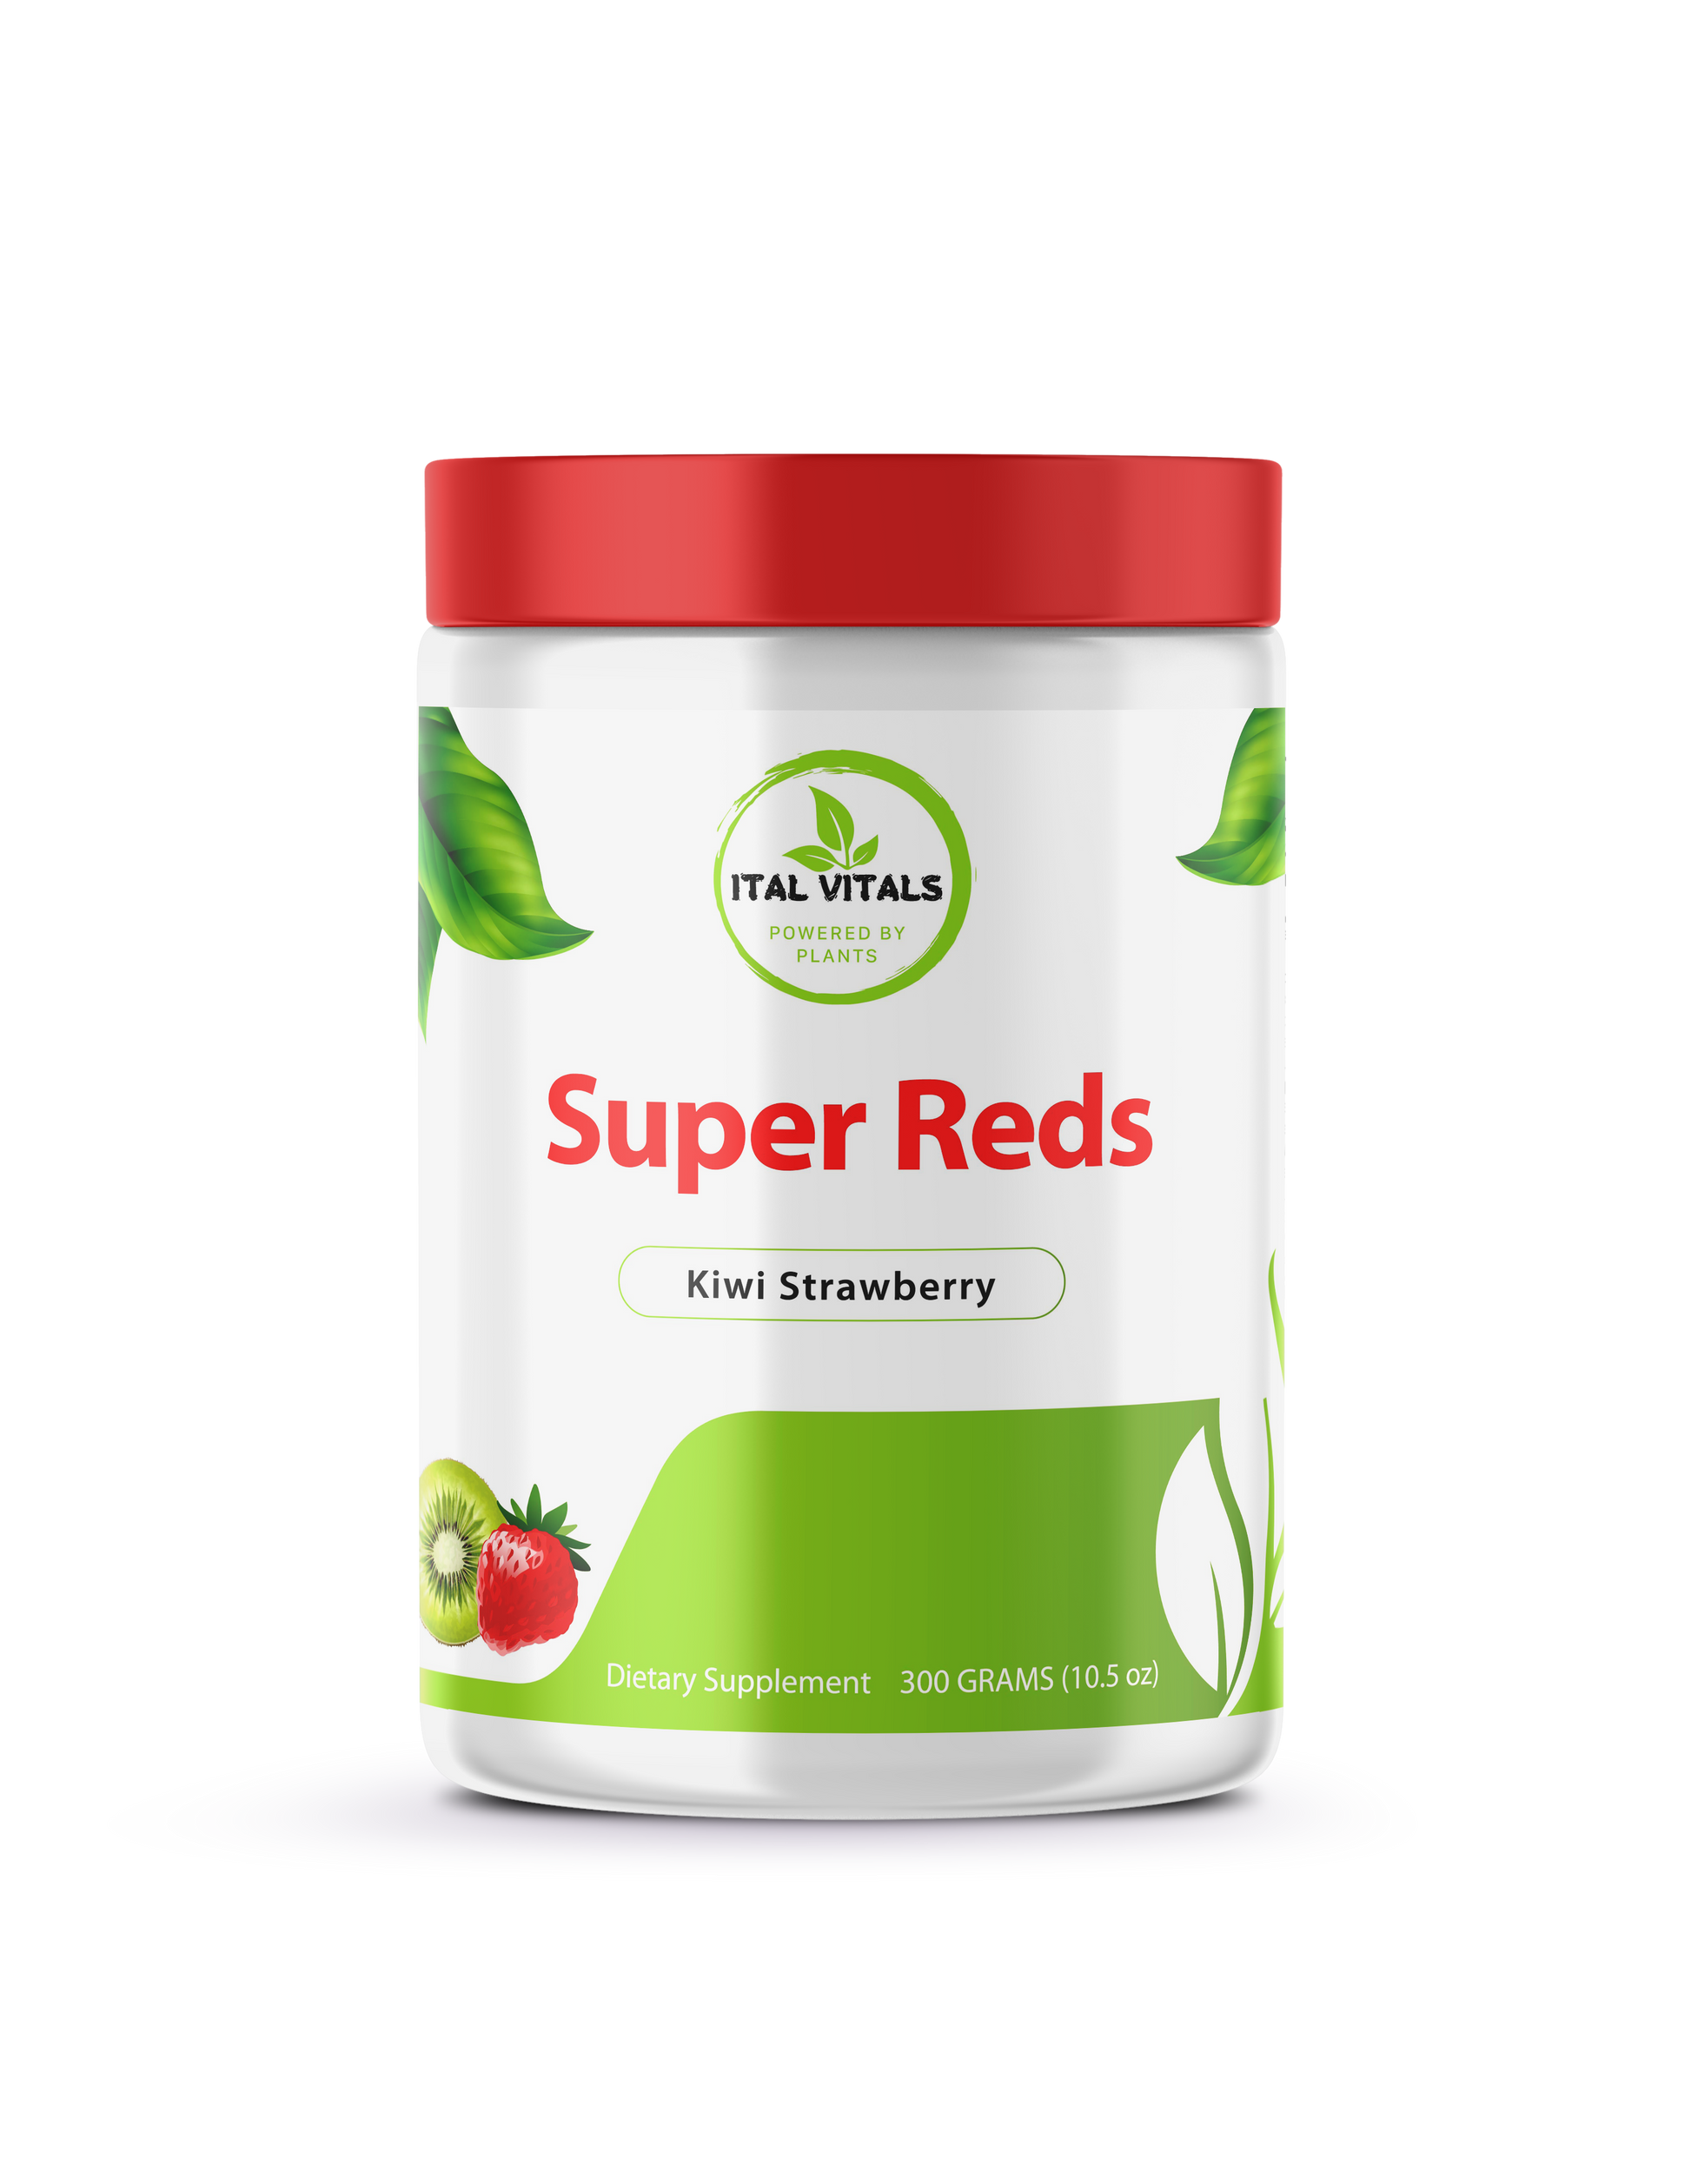 Super Reds (Kiwi Strawberry) - Ital Vitals